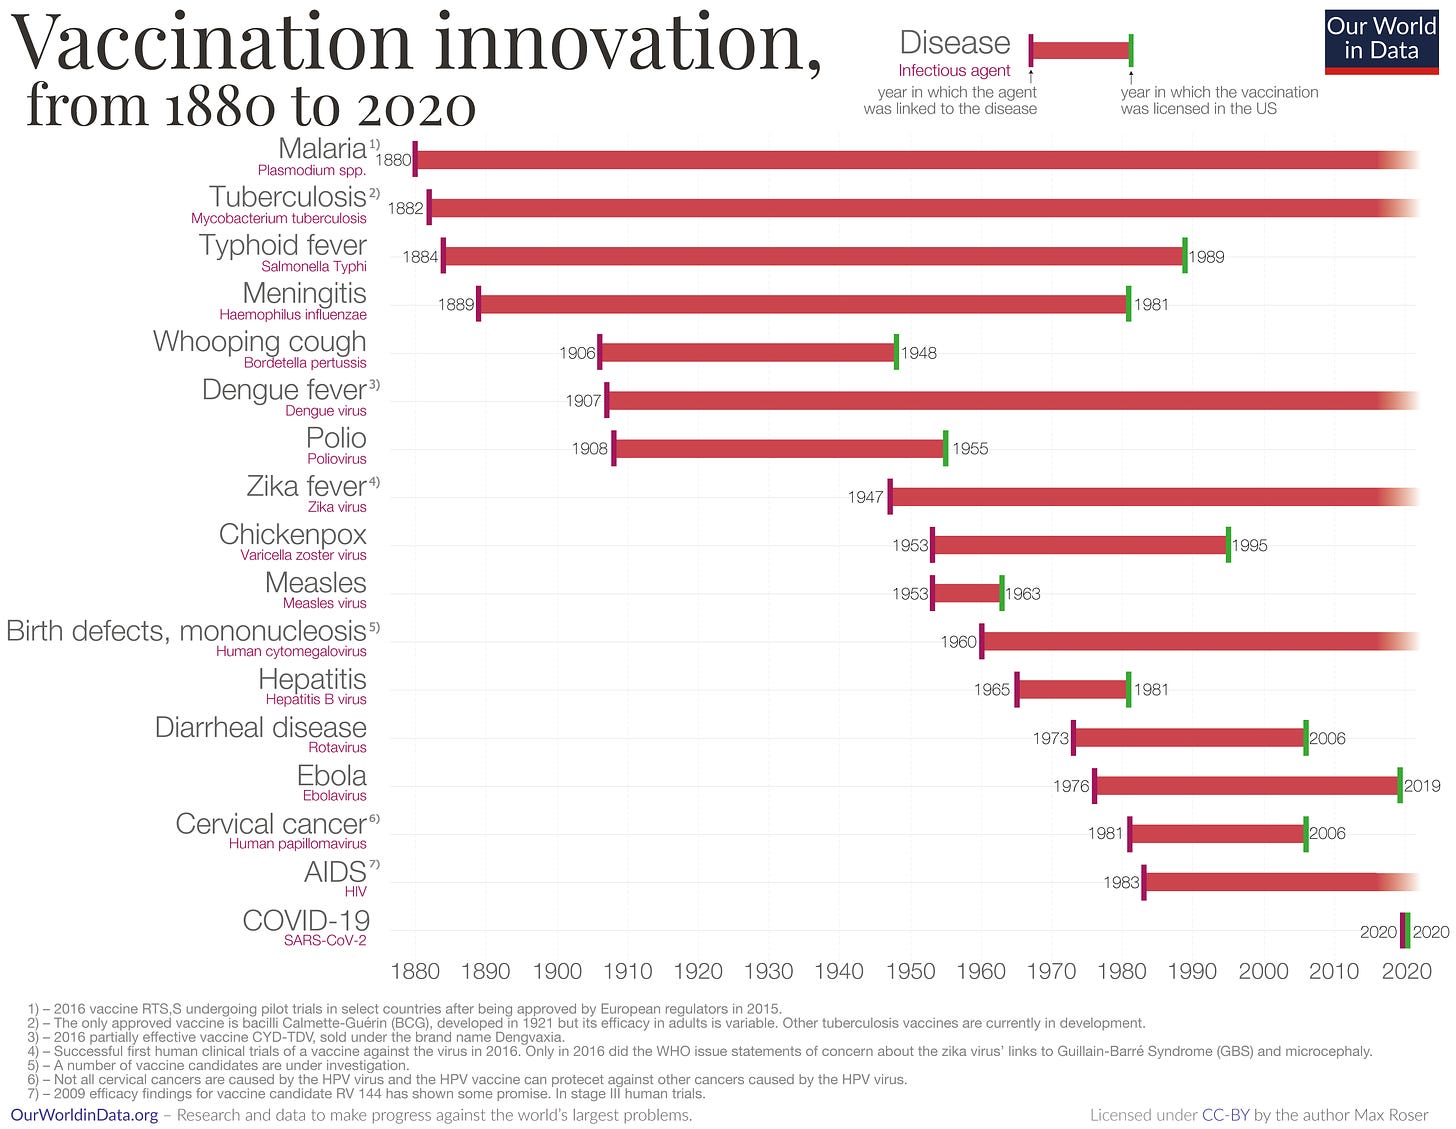 Vaccination innovation chart